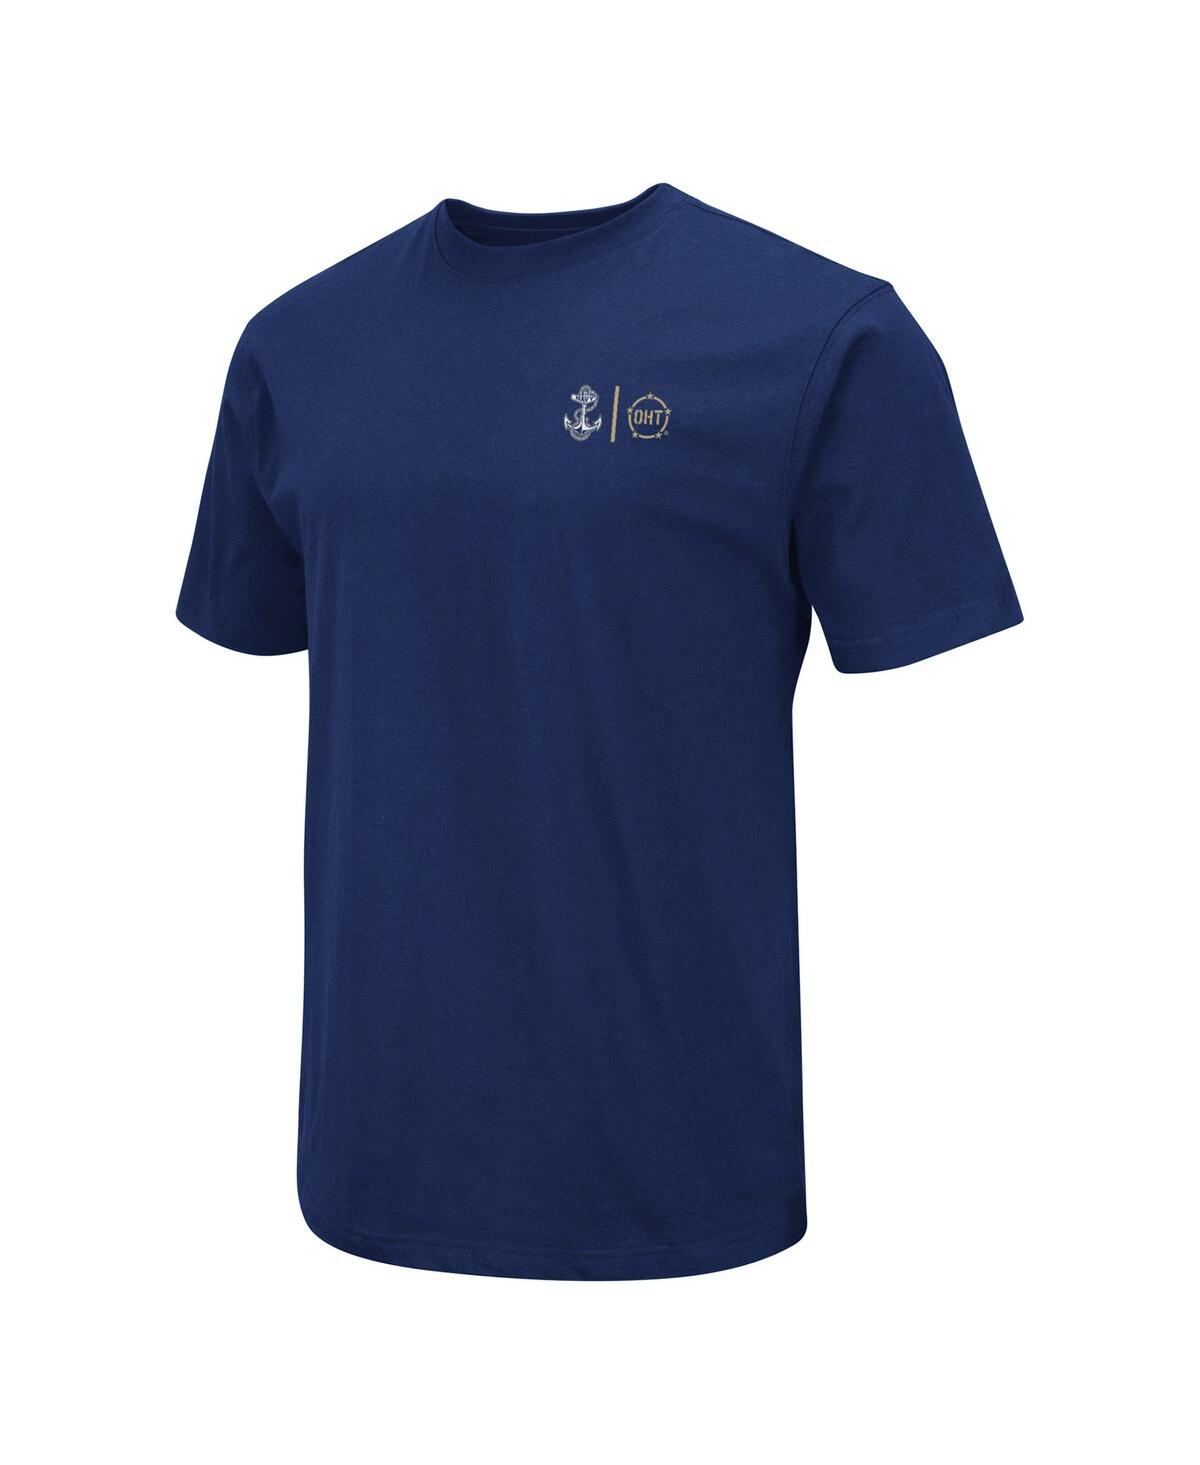 Shop Colosseum Men's  Navy Navy Midshipmen Oht Military-inspired Appreciation T-shirt